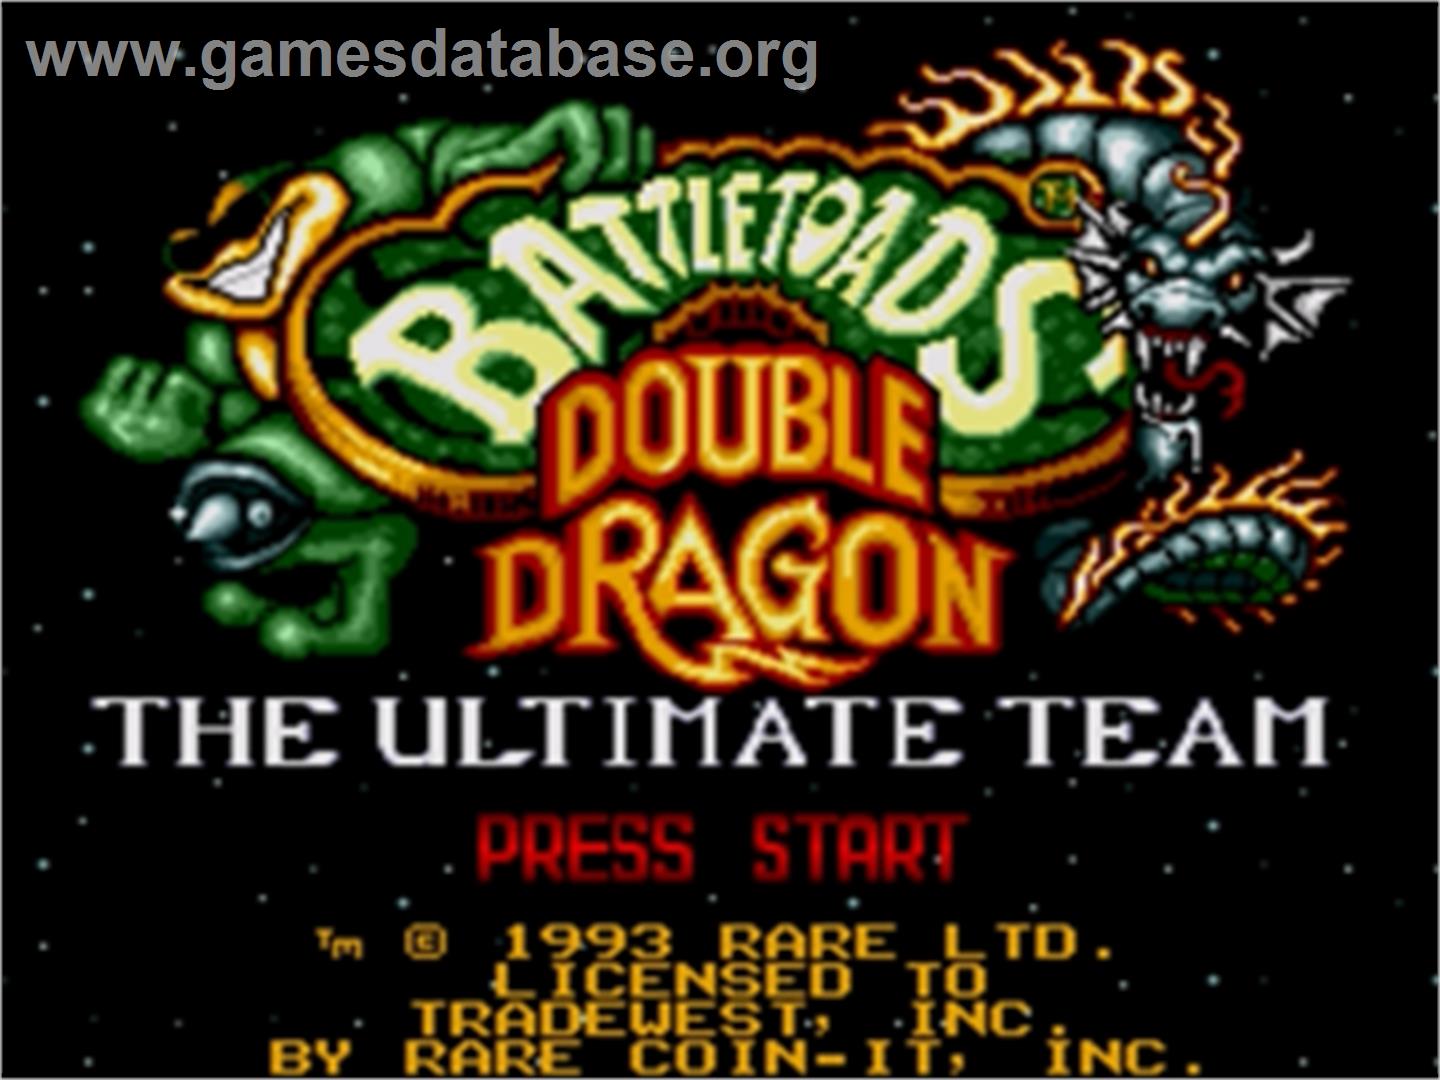 Battletoads & Double Dragon: The Ultimate Team - Sega Genesis - Artwork - Title Screen